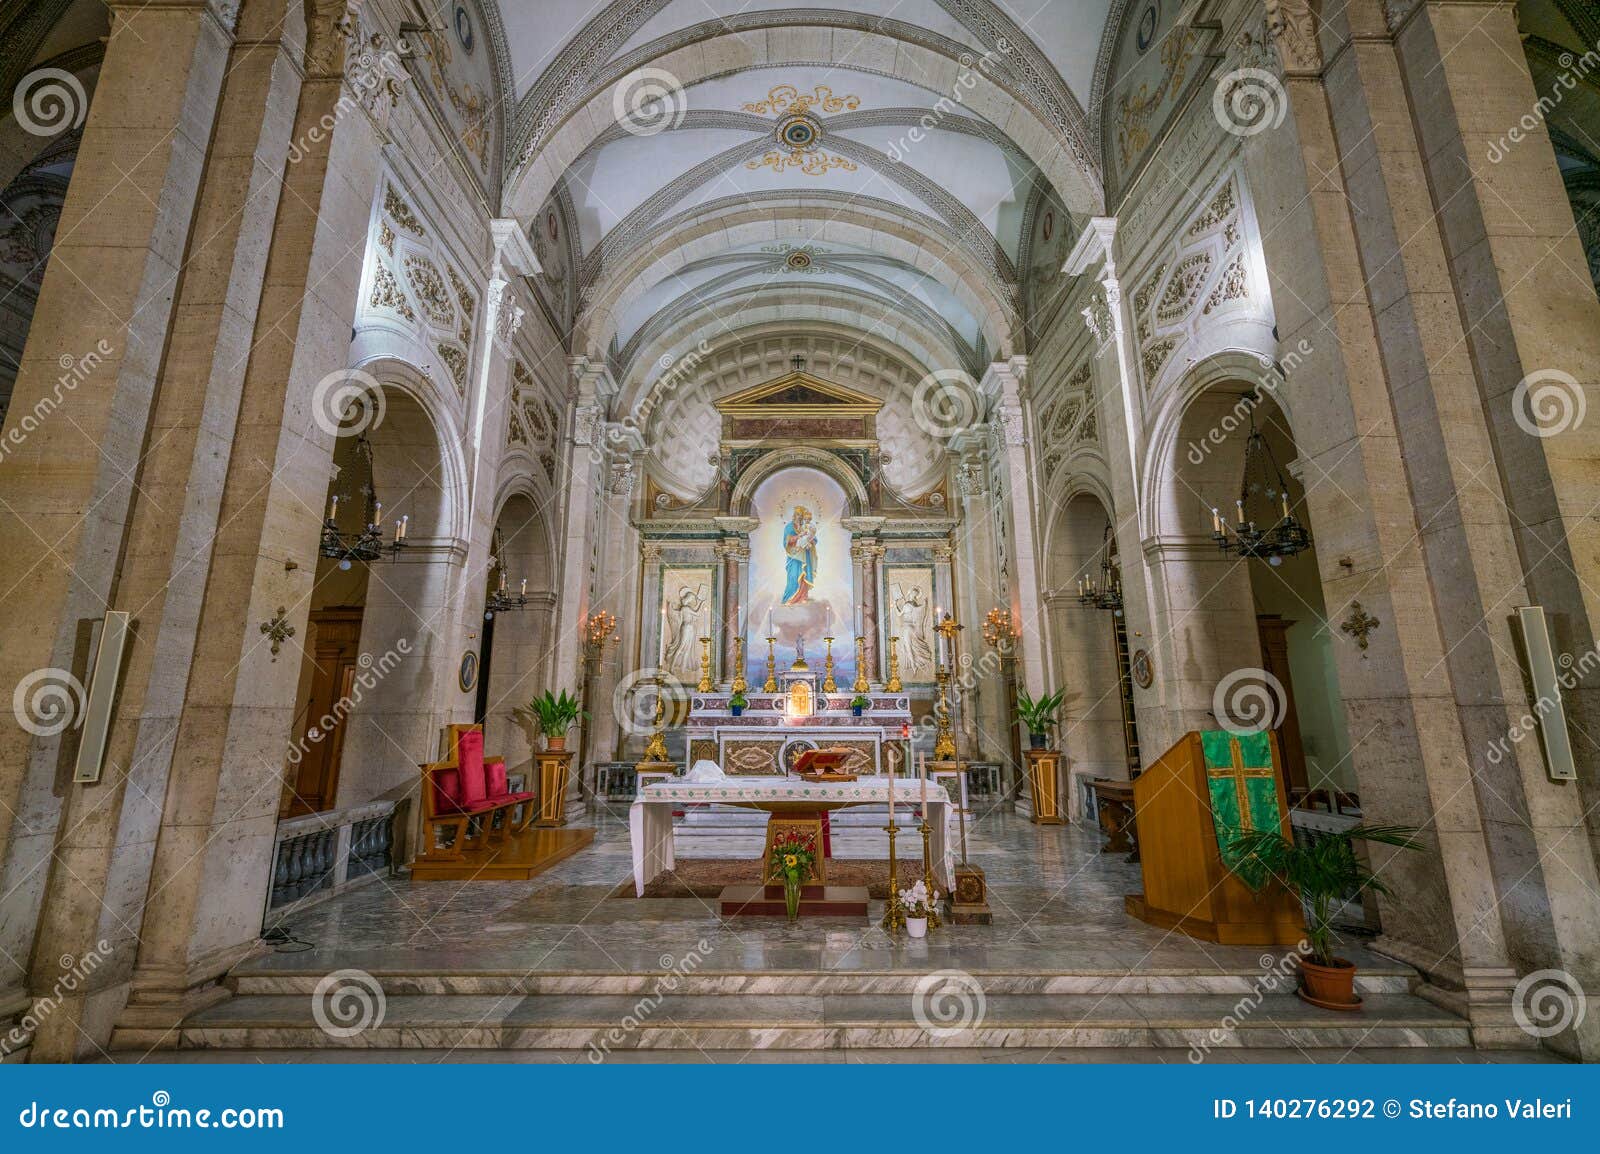 interior sight from church of nostra signora del sacro cuore in piazza navona, rome, italy.